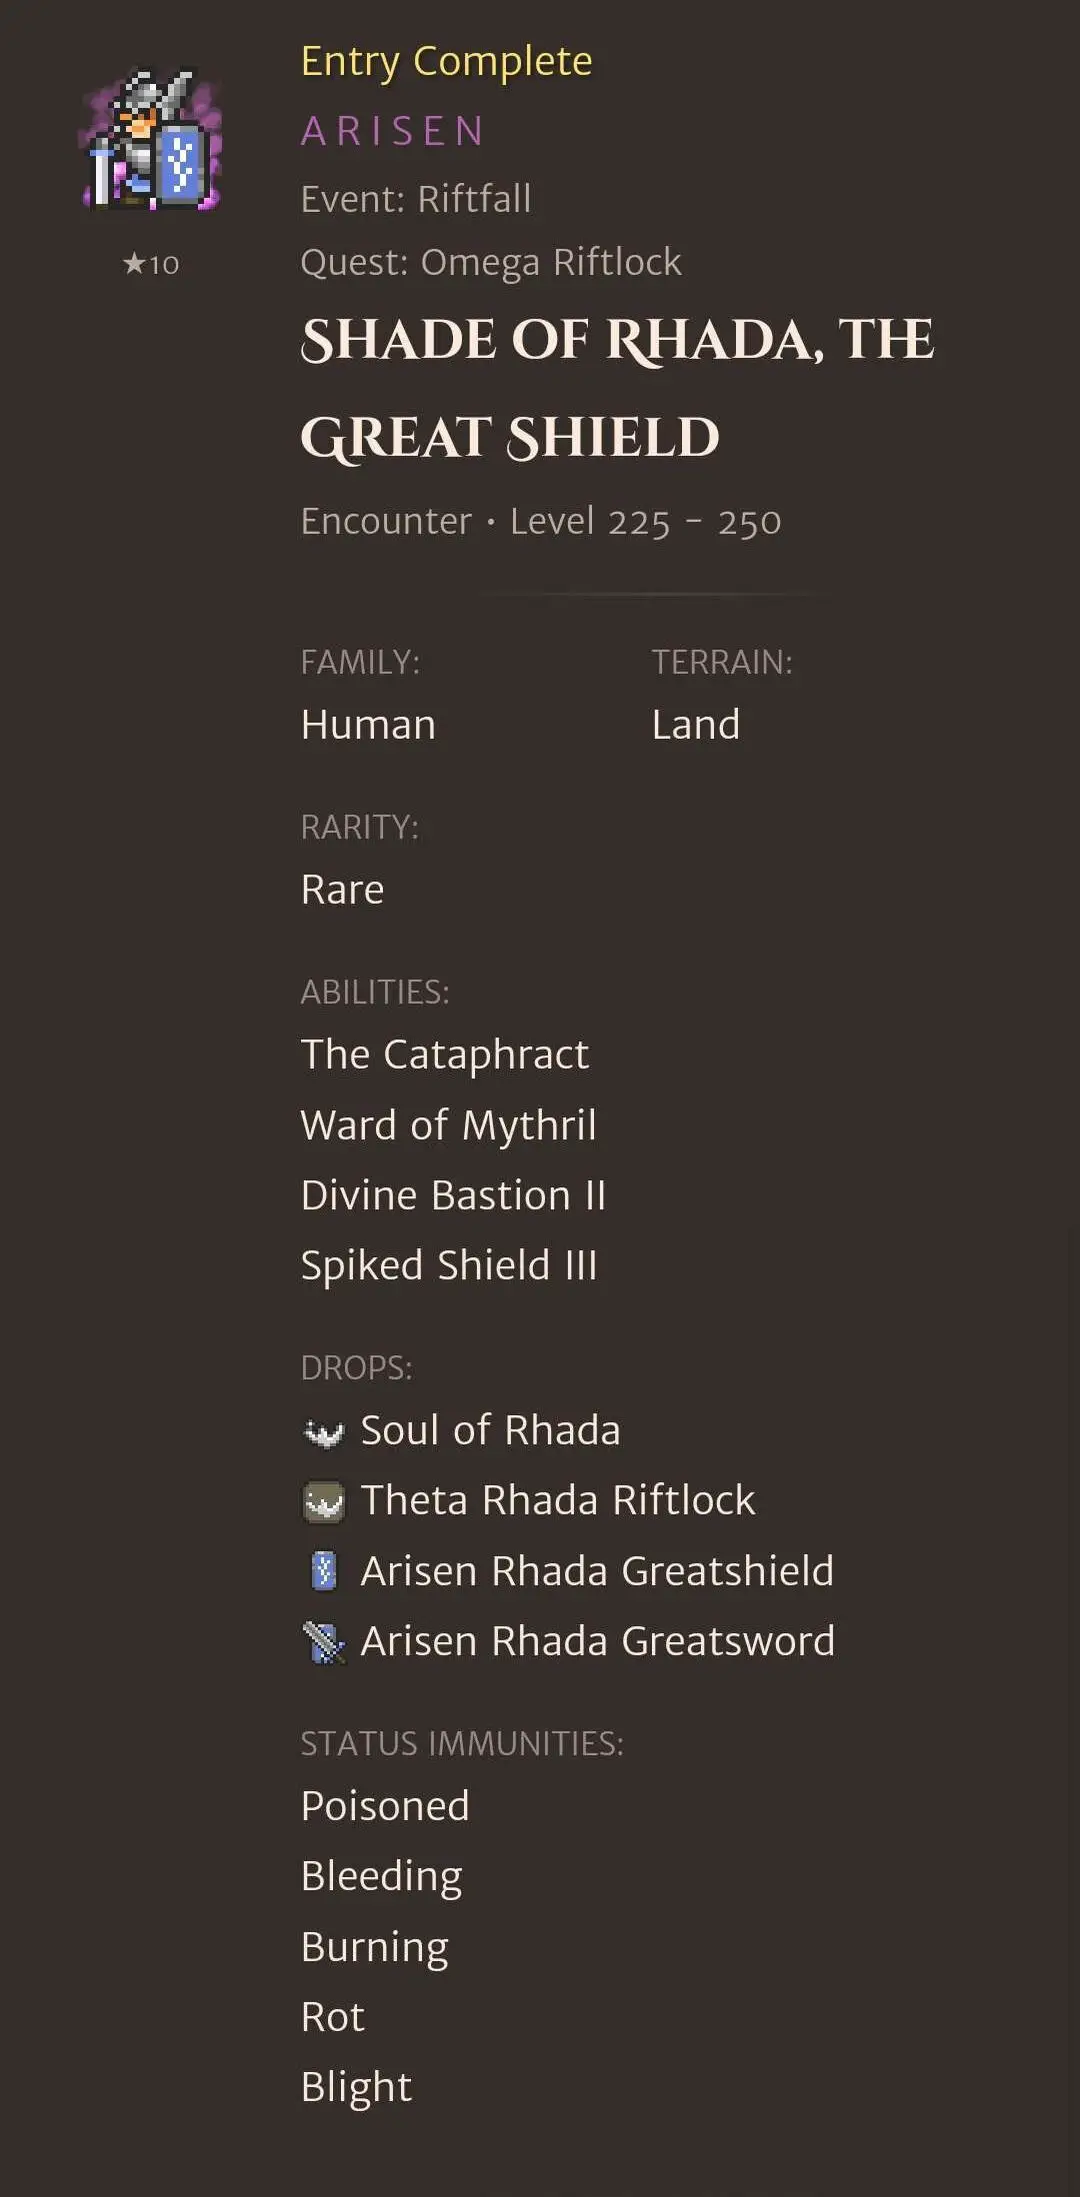 Arisen Shade of Rhada, The Great Shield codex entry